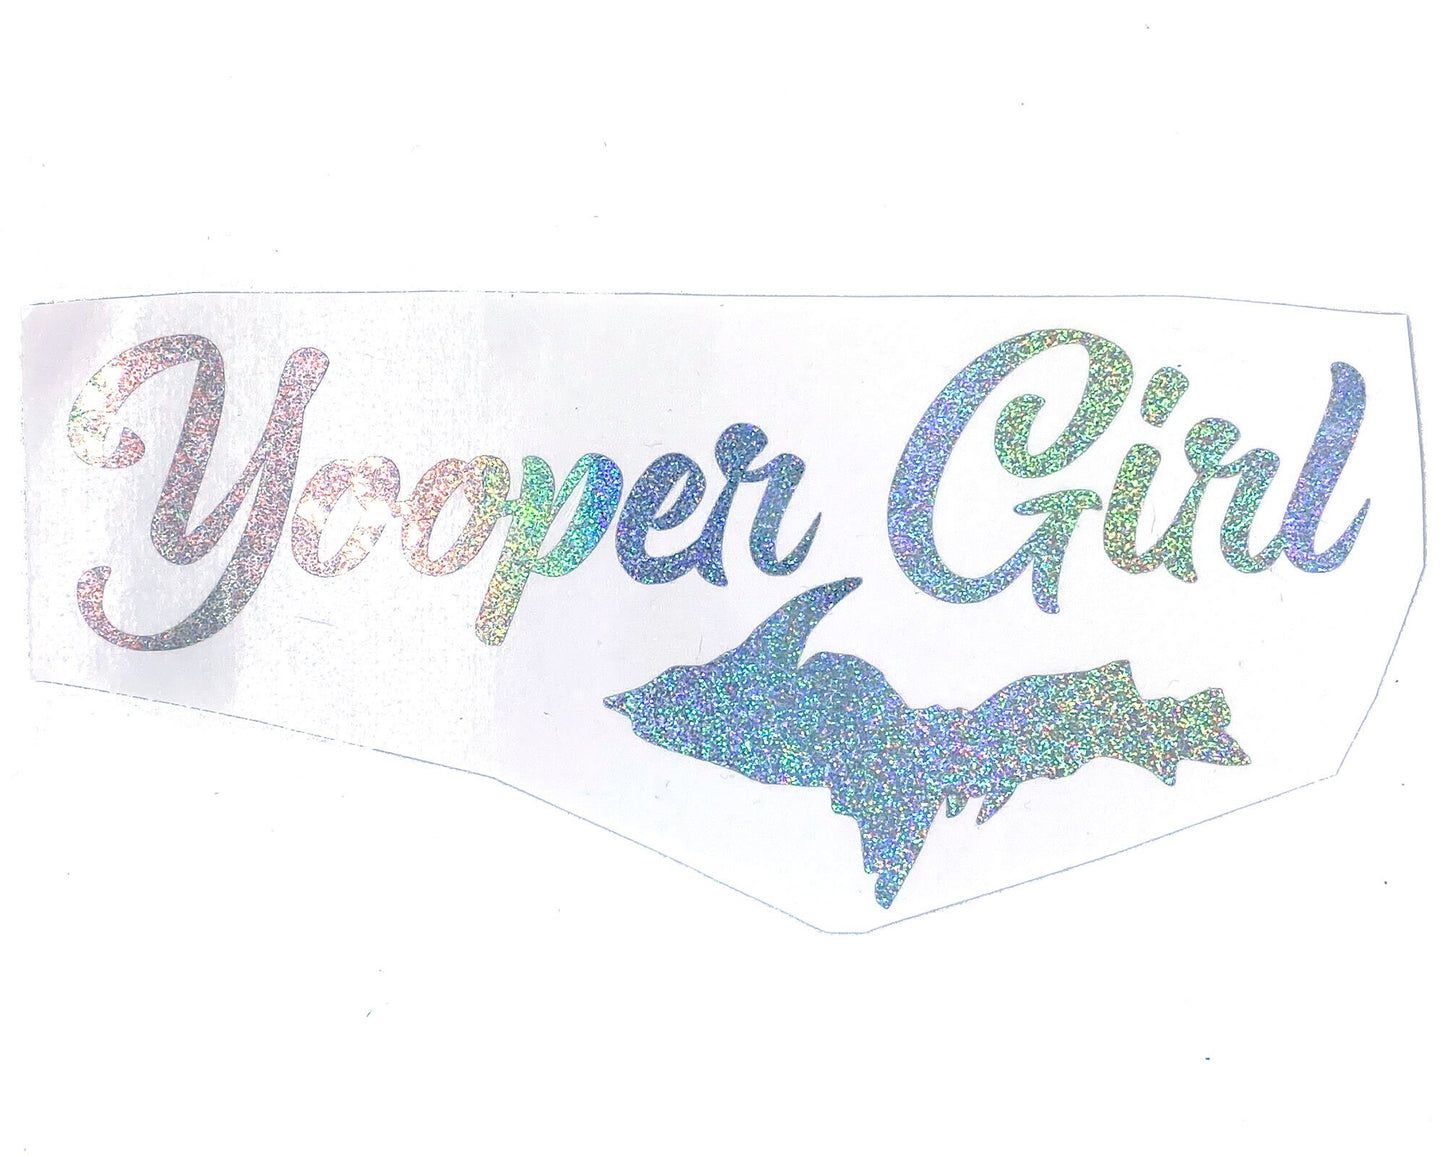 Yooper Girl Glitter Car Decal | Upper Michigan Decals | U.P. Gift for Yooper